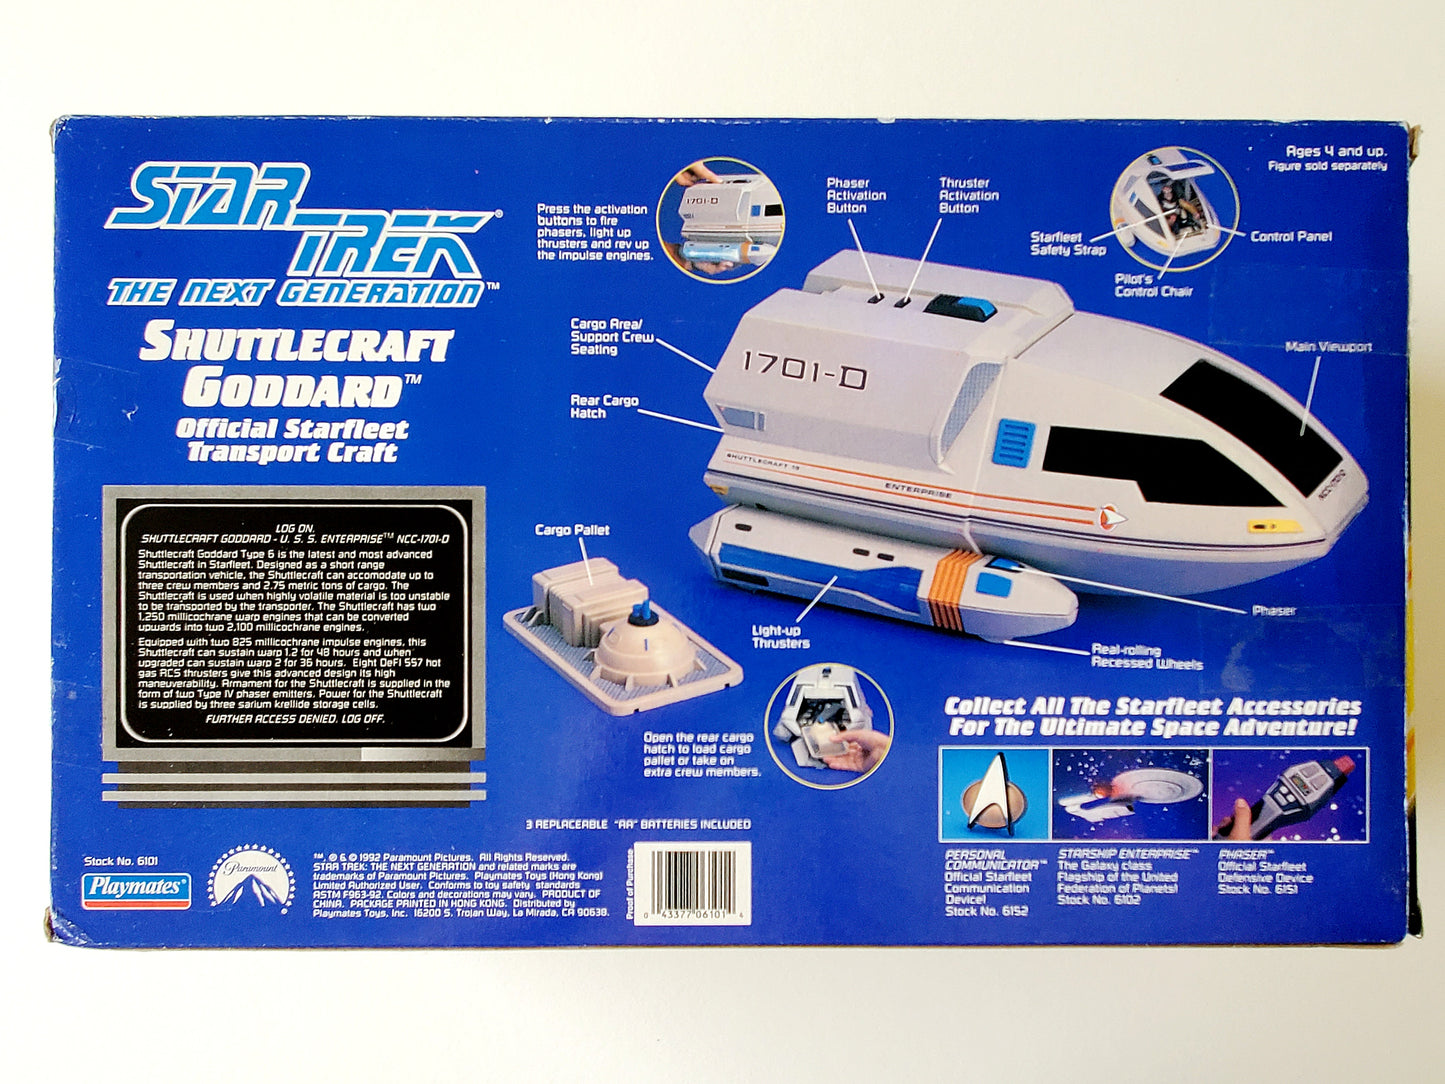 Shuttlecraft Goddard from Star Trek: The Next Generation